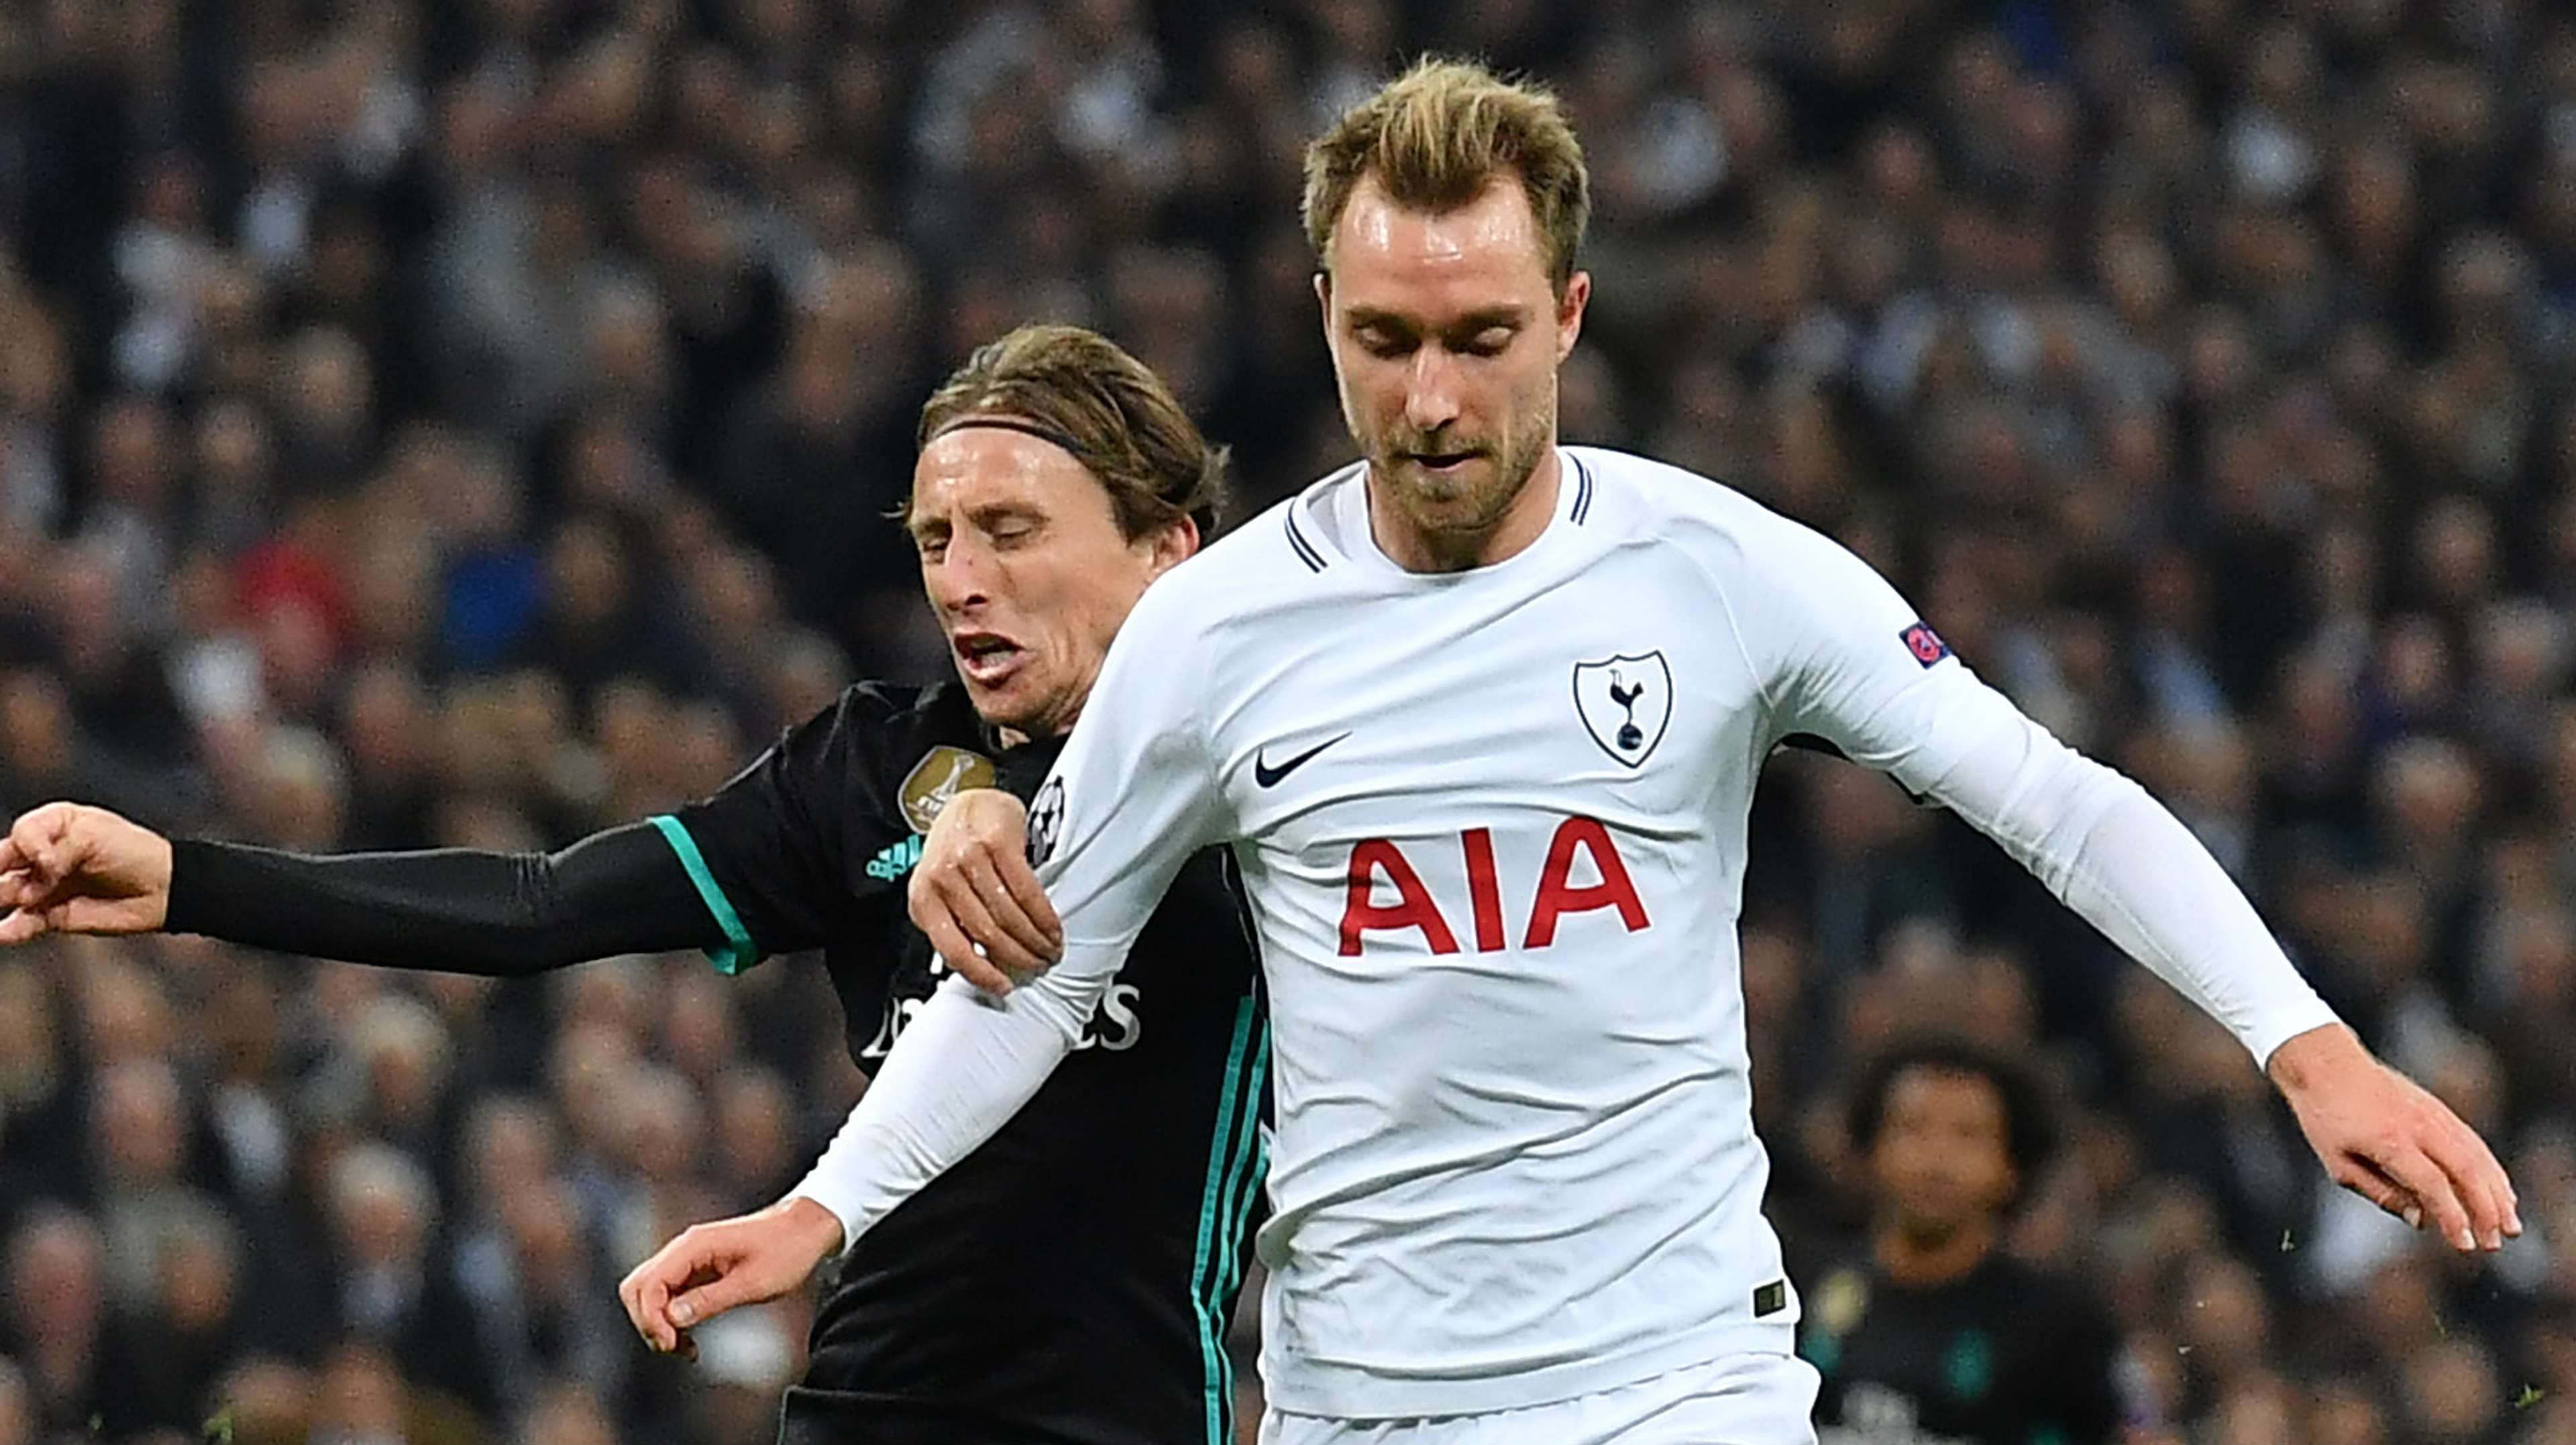 Christian Eriksen, Luka Modric, Tottenham vs Real Madrid, 17/18